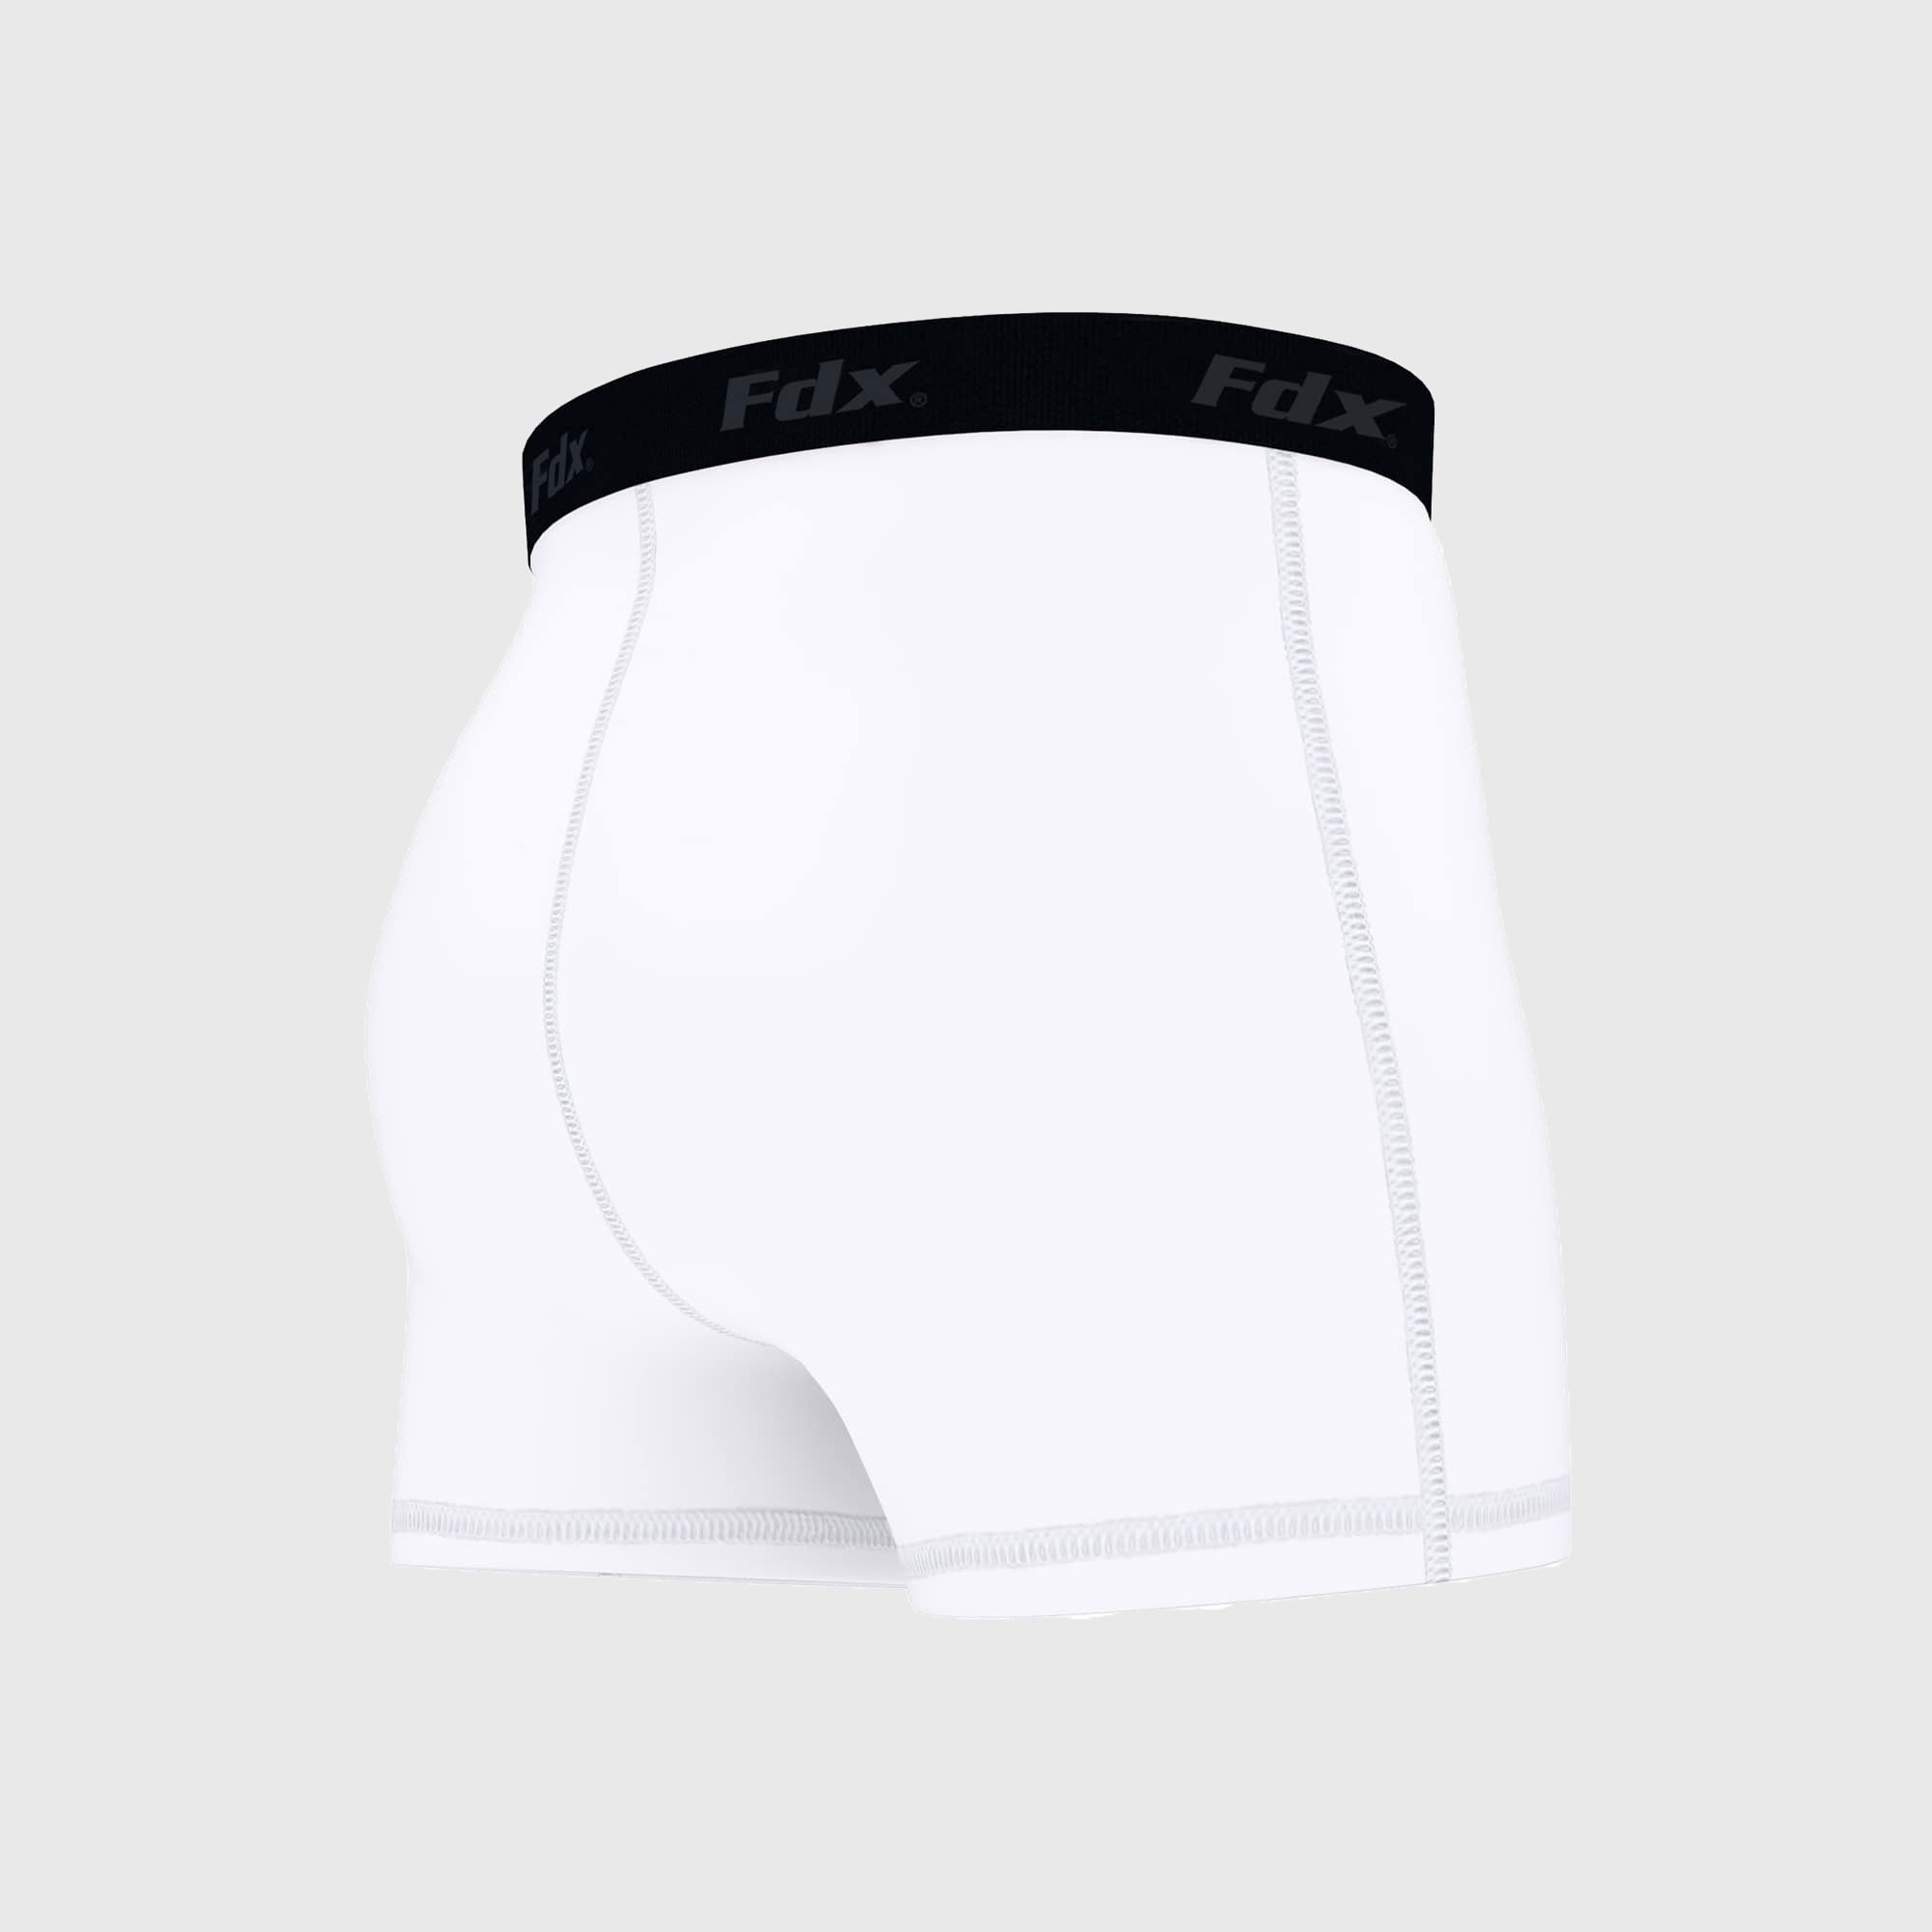 Fdx Men's White Compression Boxer Shorts Gym Workout Running Athletic Yoga Elastic Waistband Stretchable Breathable